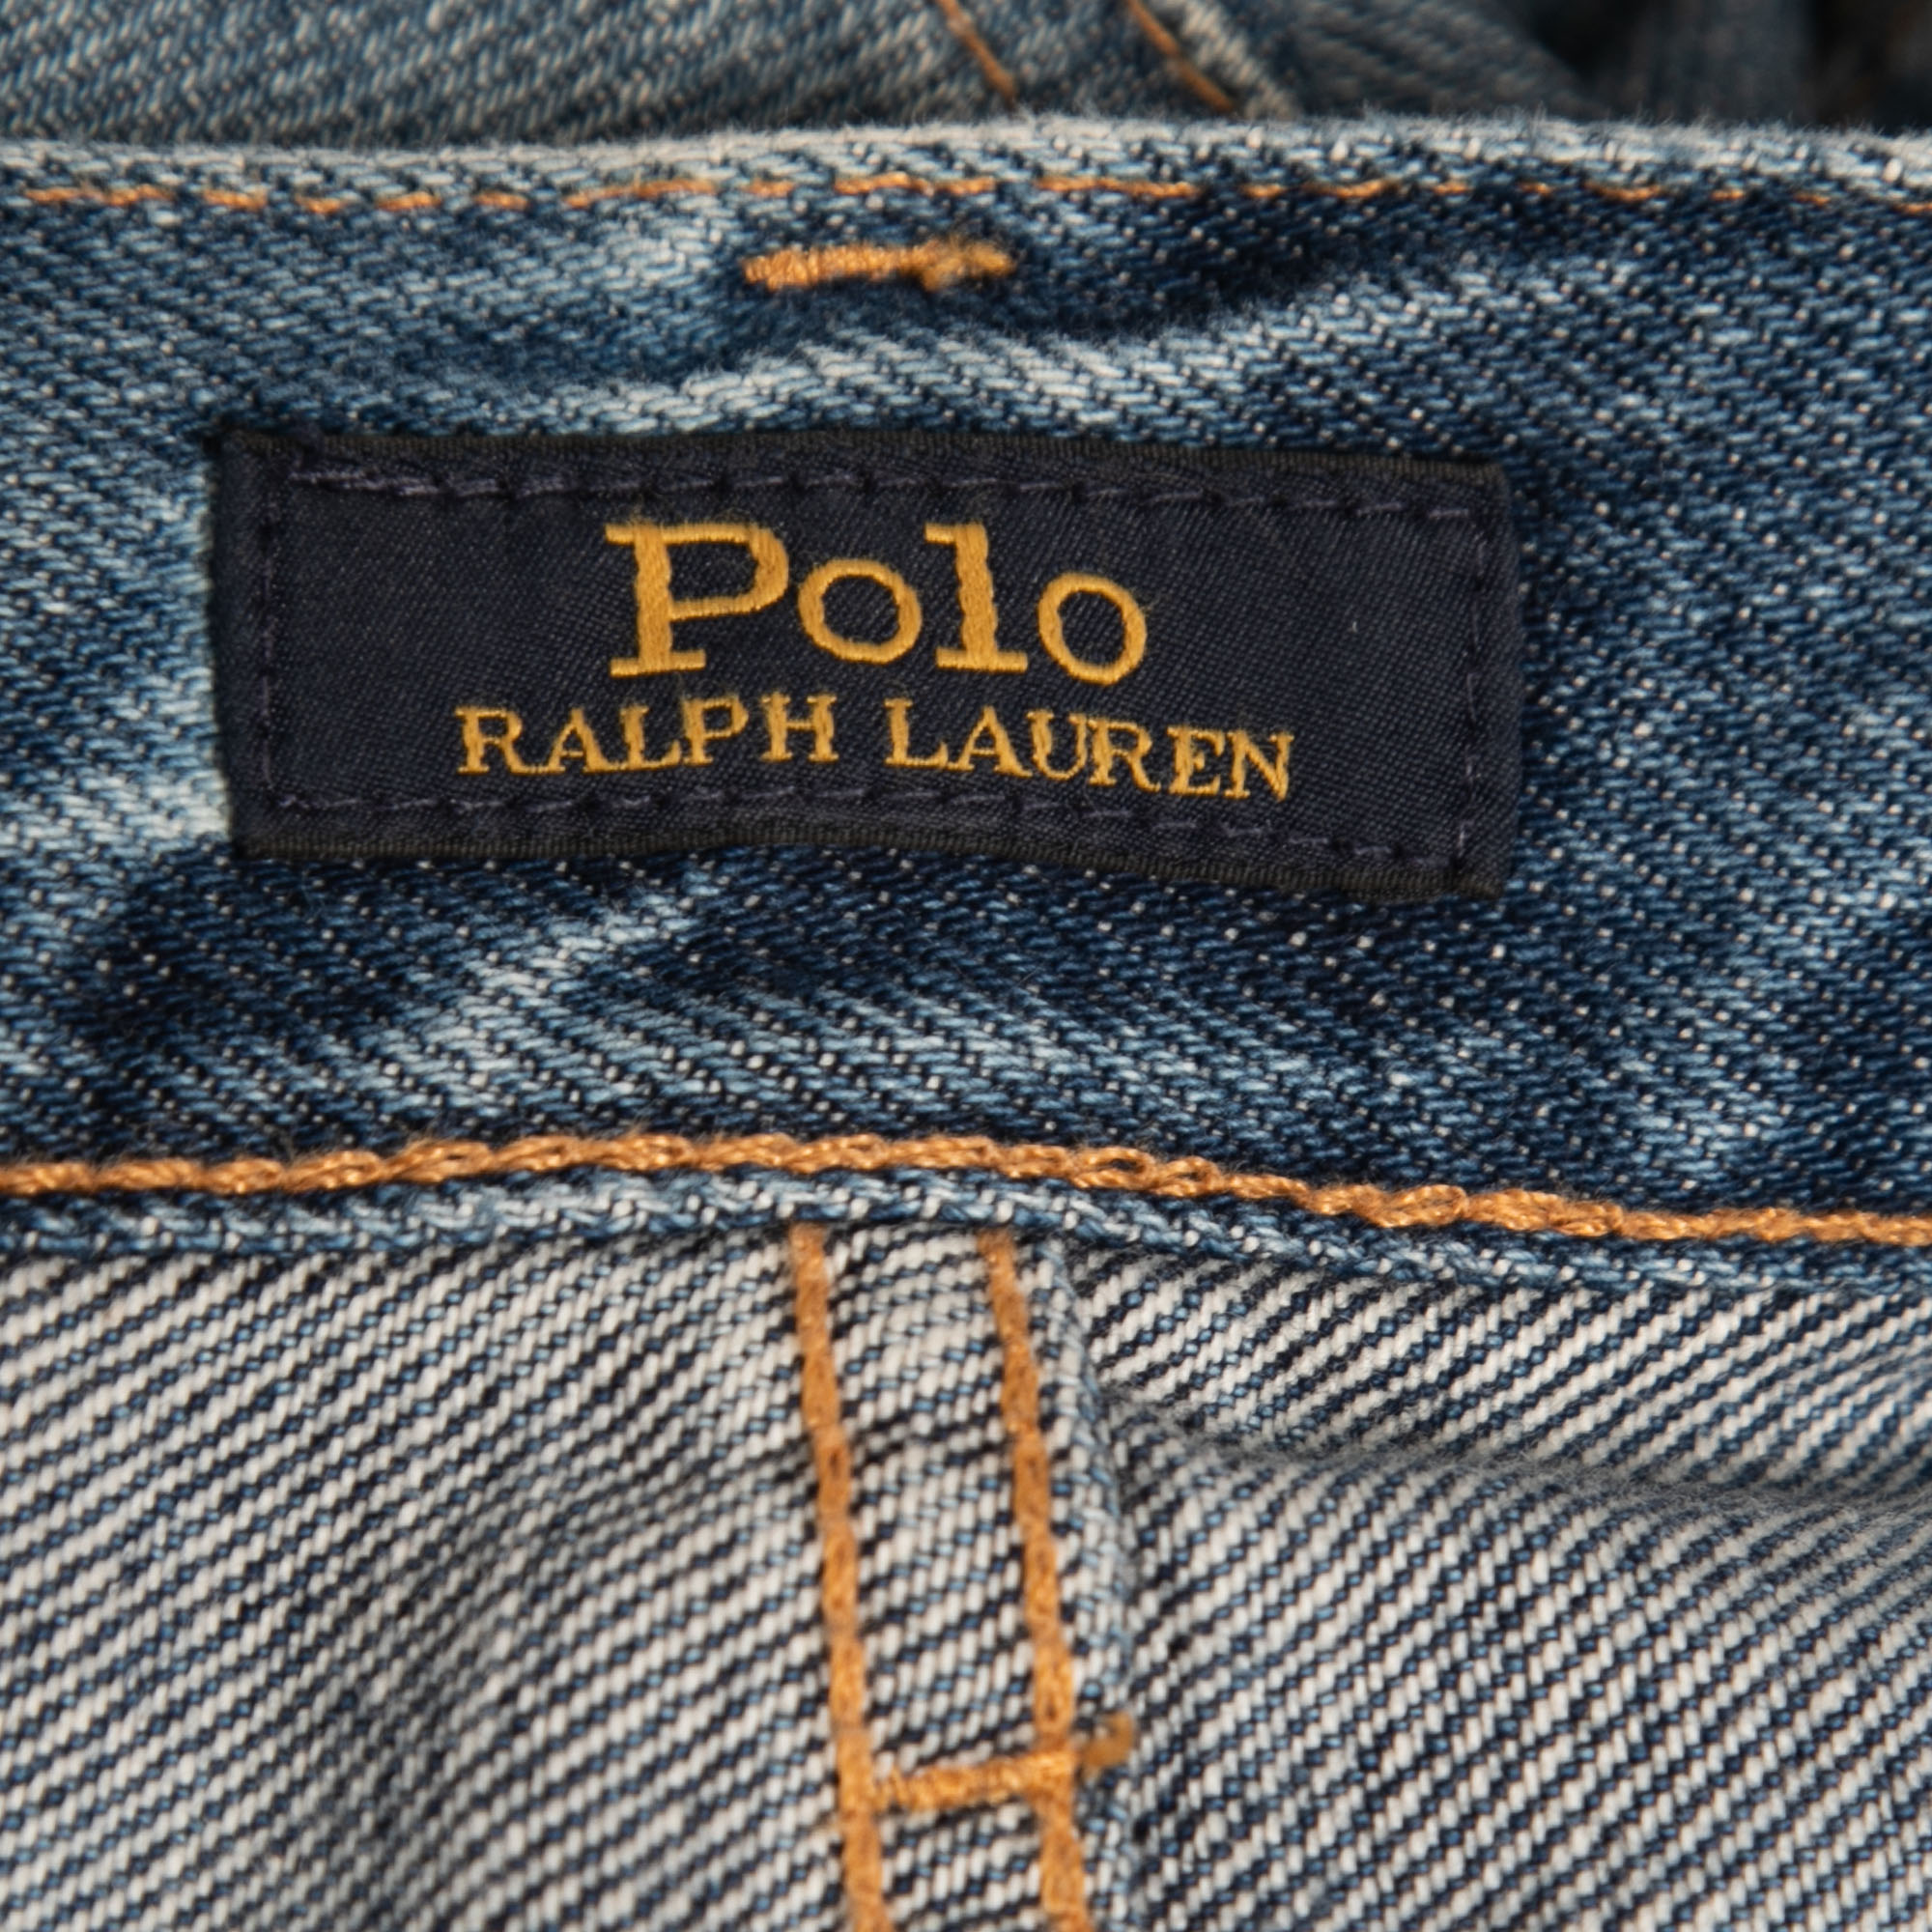 Polo Ralph Lauren Blue Dyed Washed Denim Avery Boyfriend Jean M Waist 27